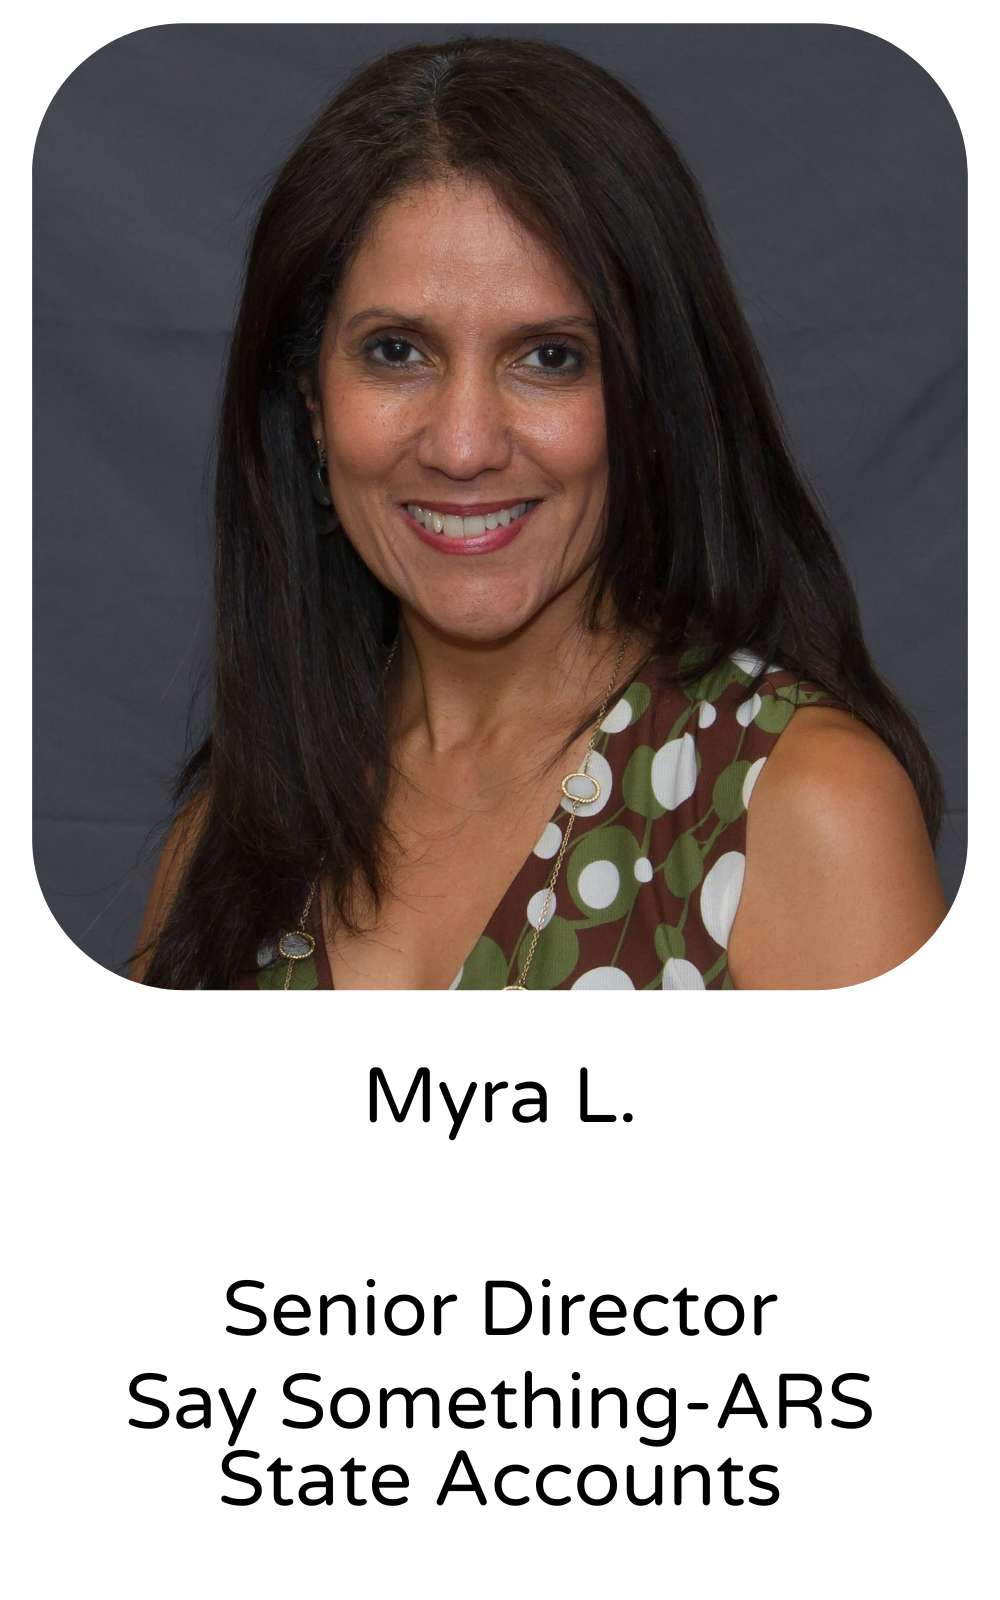 Myra L., Senior Director, Say Something-ARS State Accounts